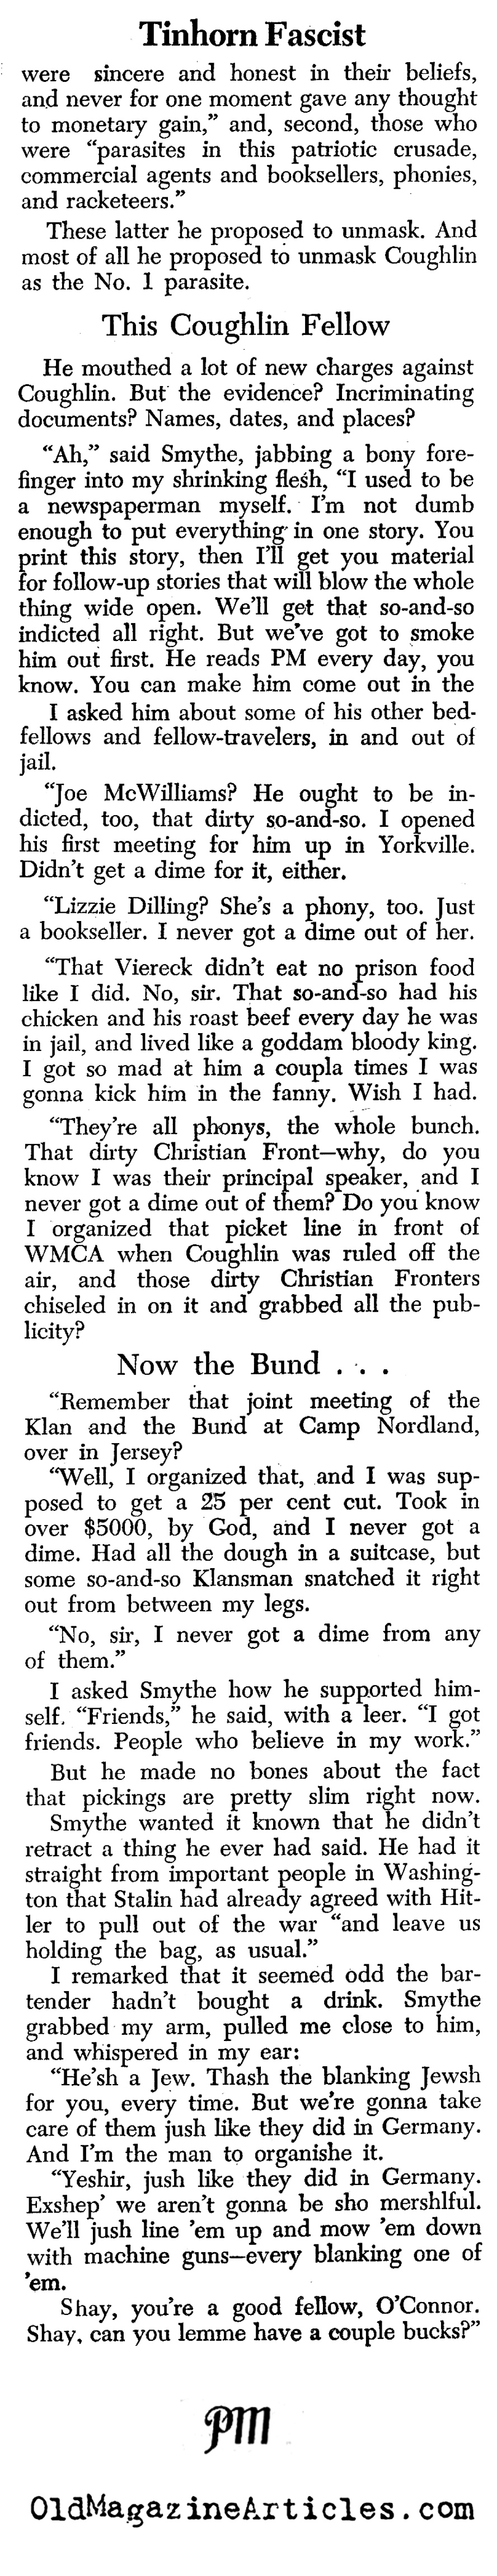 The Bund-Klan Connection (<i>PM</i> Tabloid, 1943)